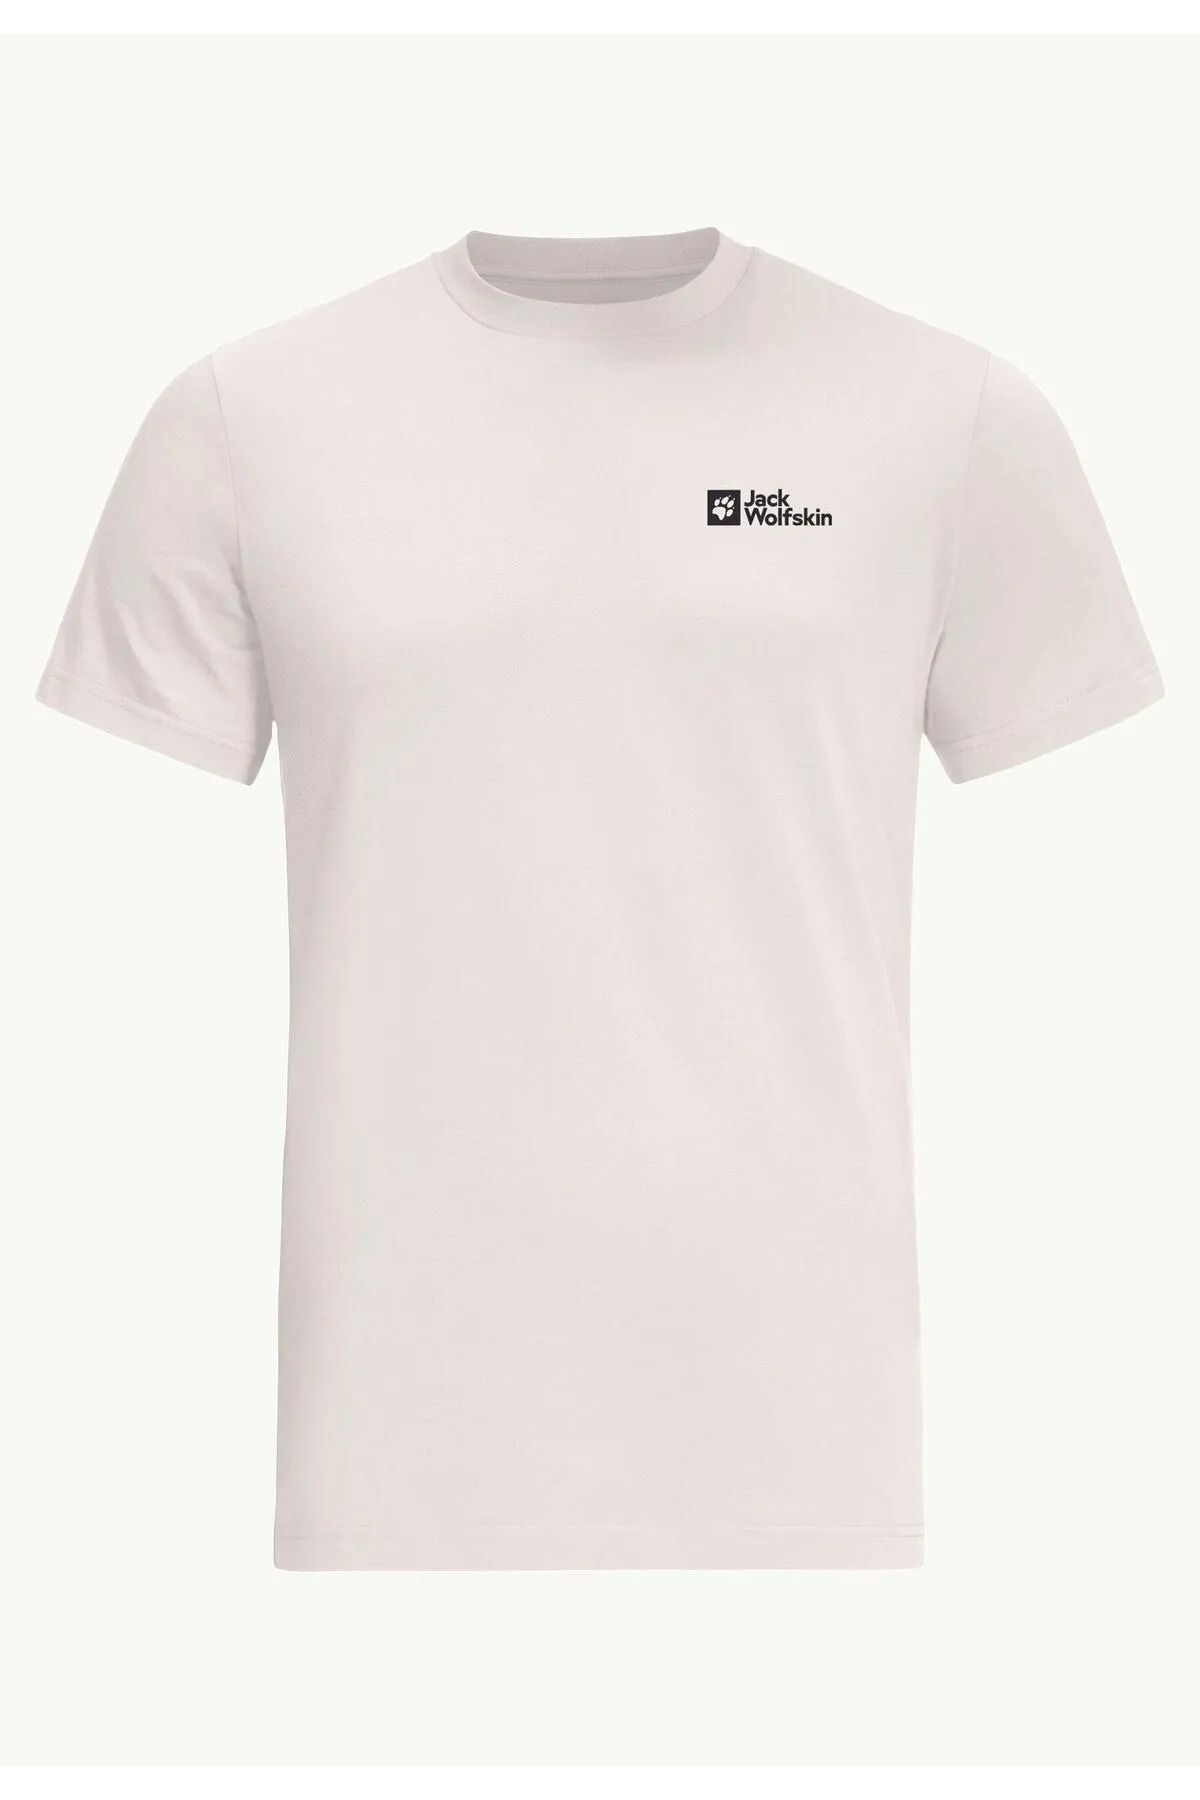 Jack Wolfskin Essential T M Erkek T-shirt